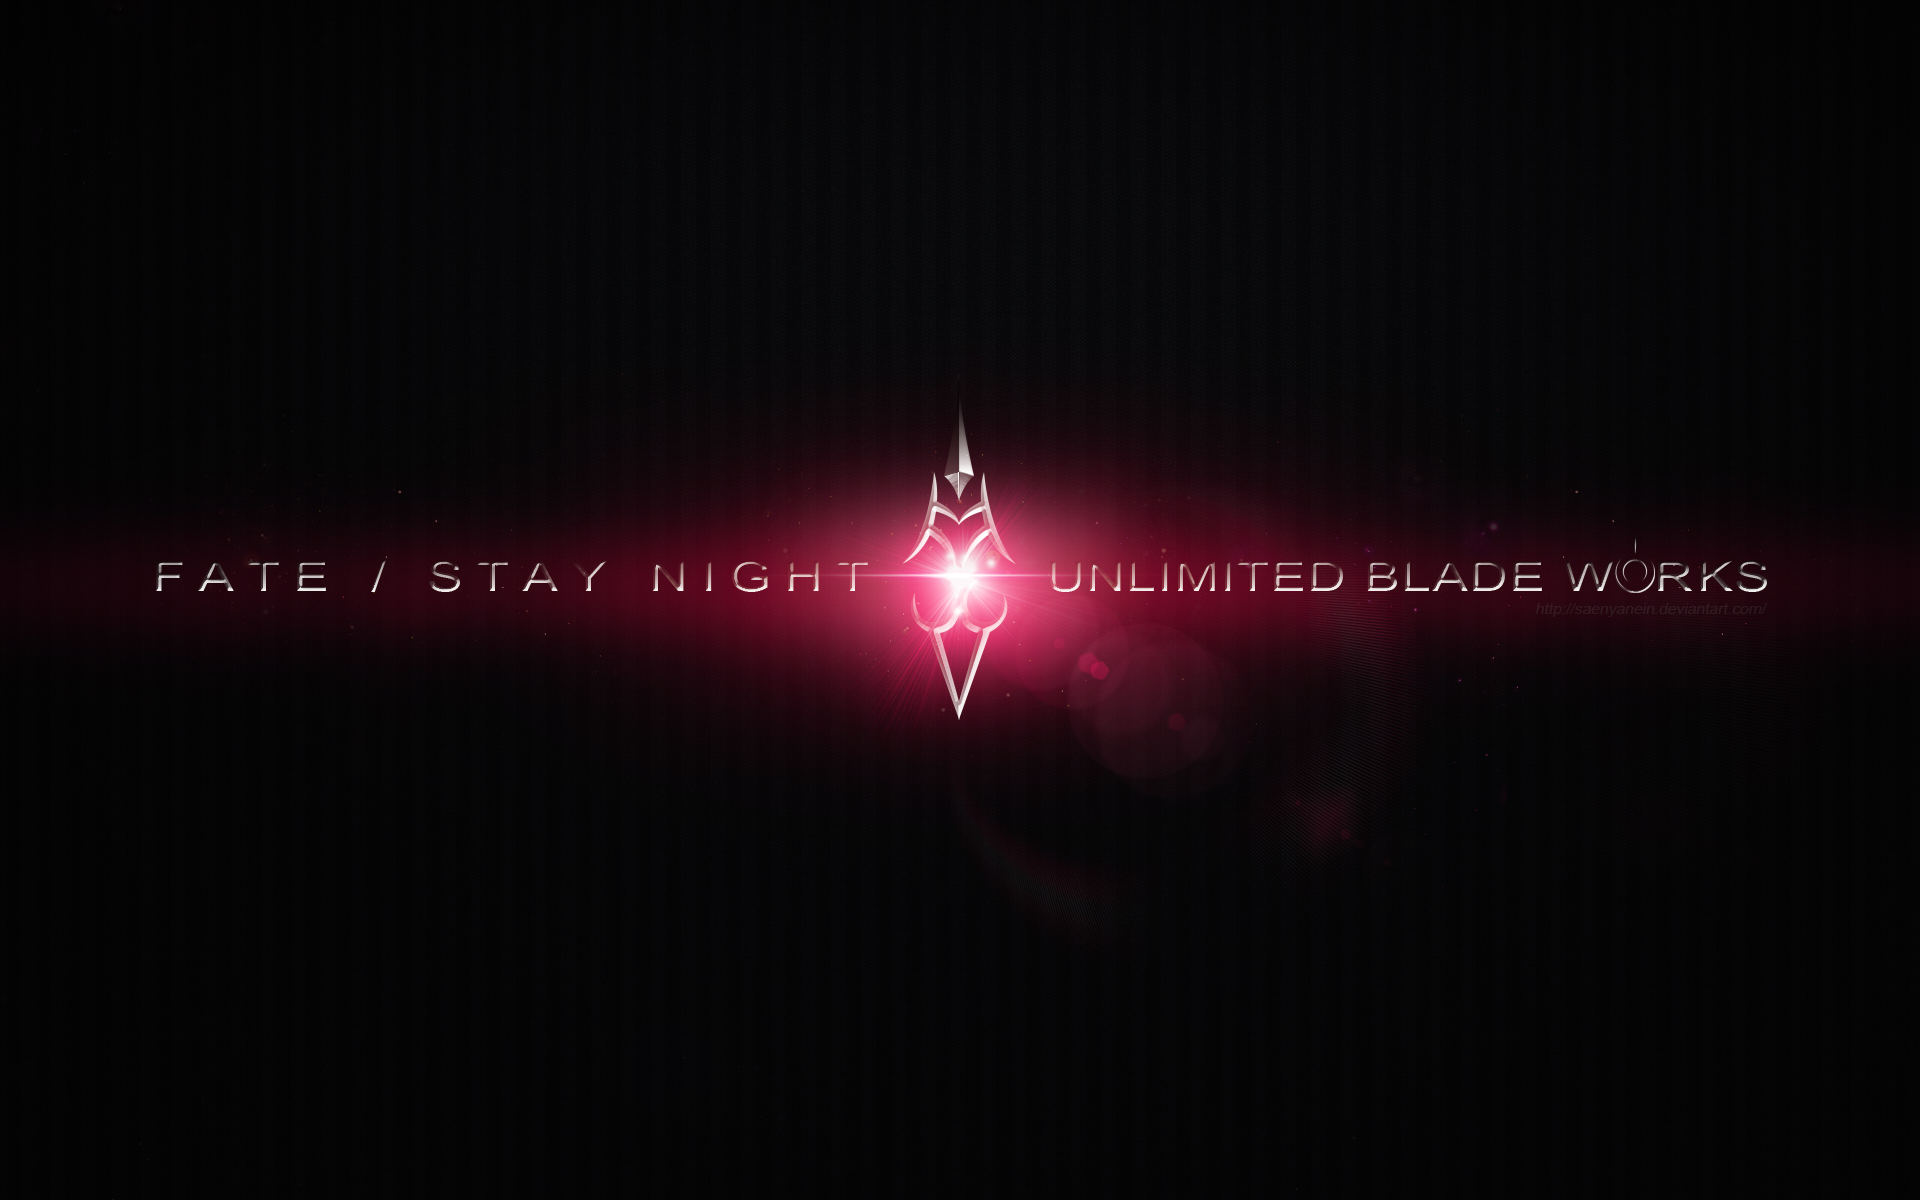 Unlimited Blade Works Background